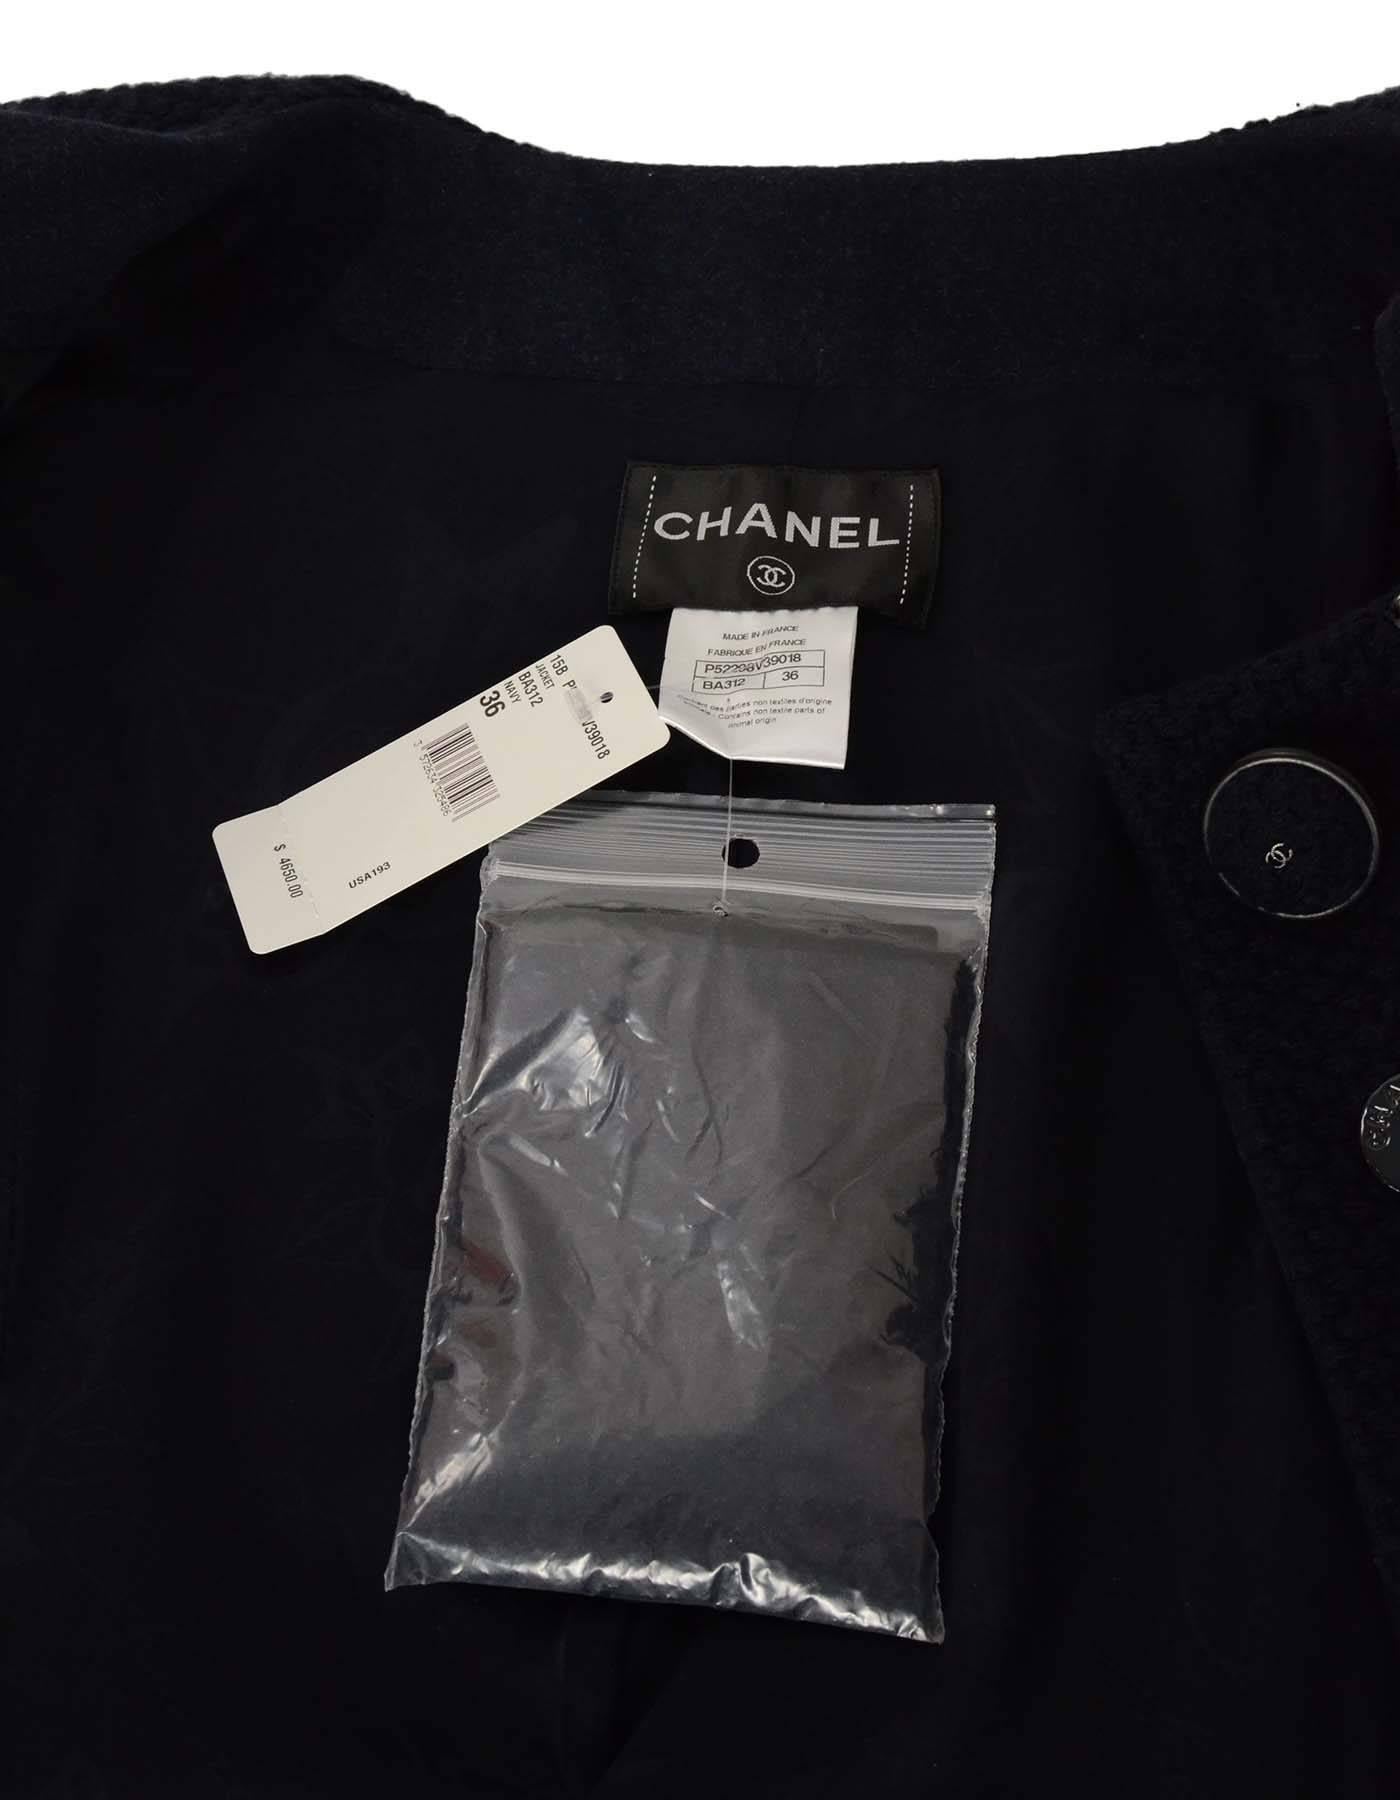 Chanel 2015 NEW W/ TAGS Navy Wool Jacket sz 36 rt. $4, 650 1